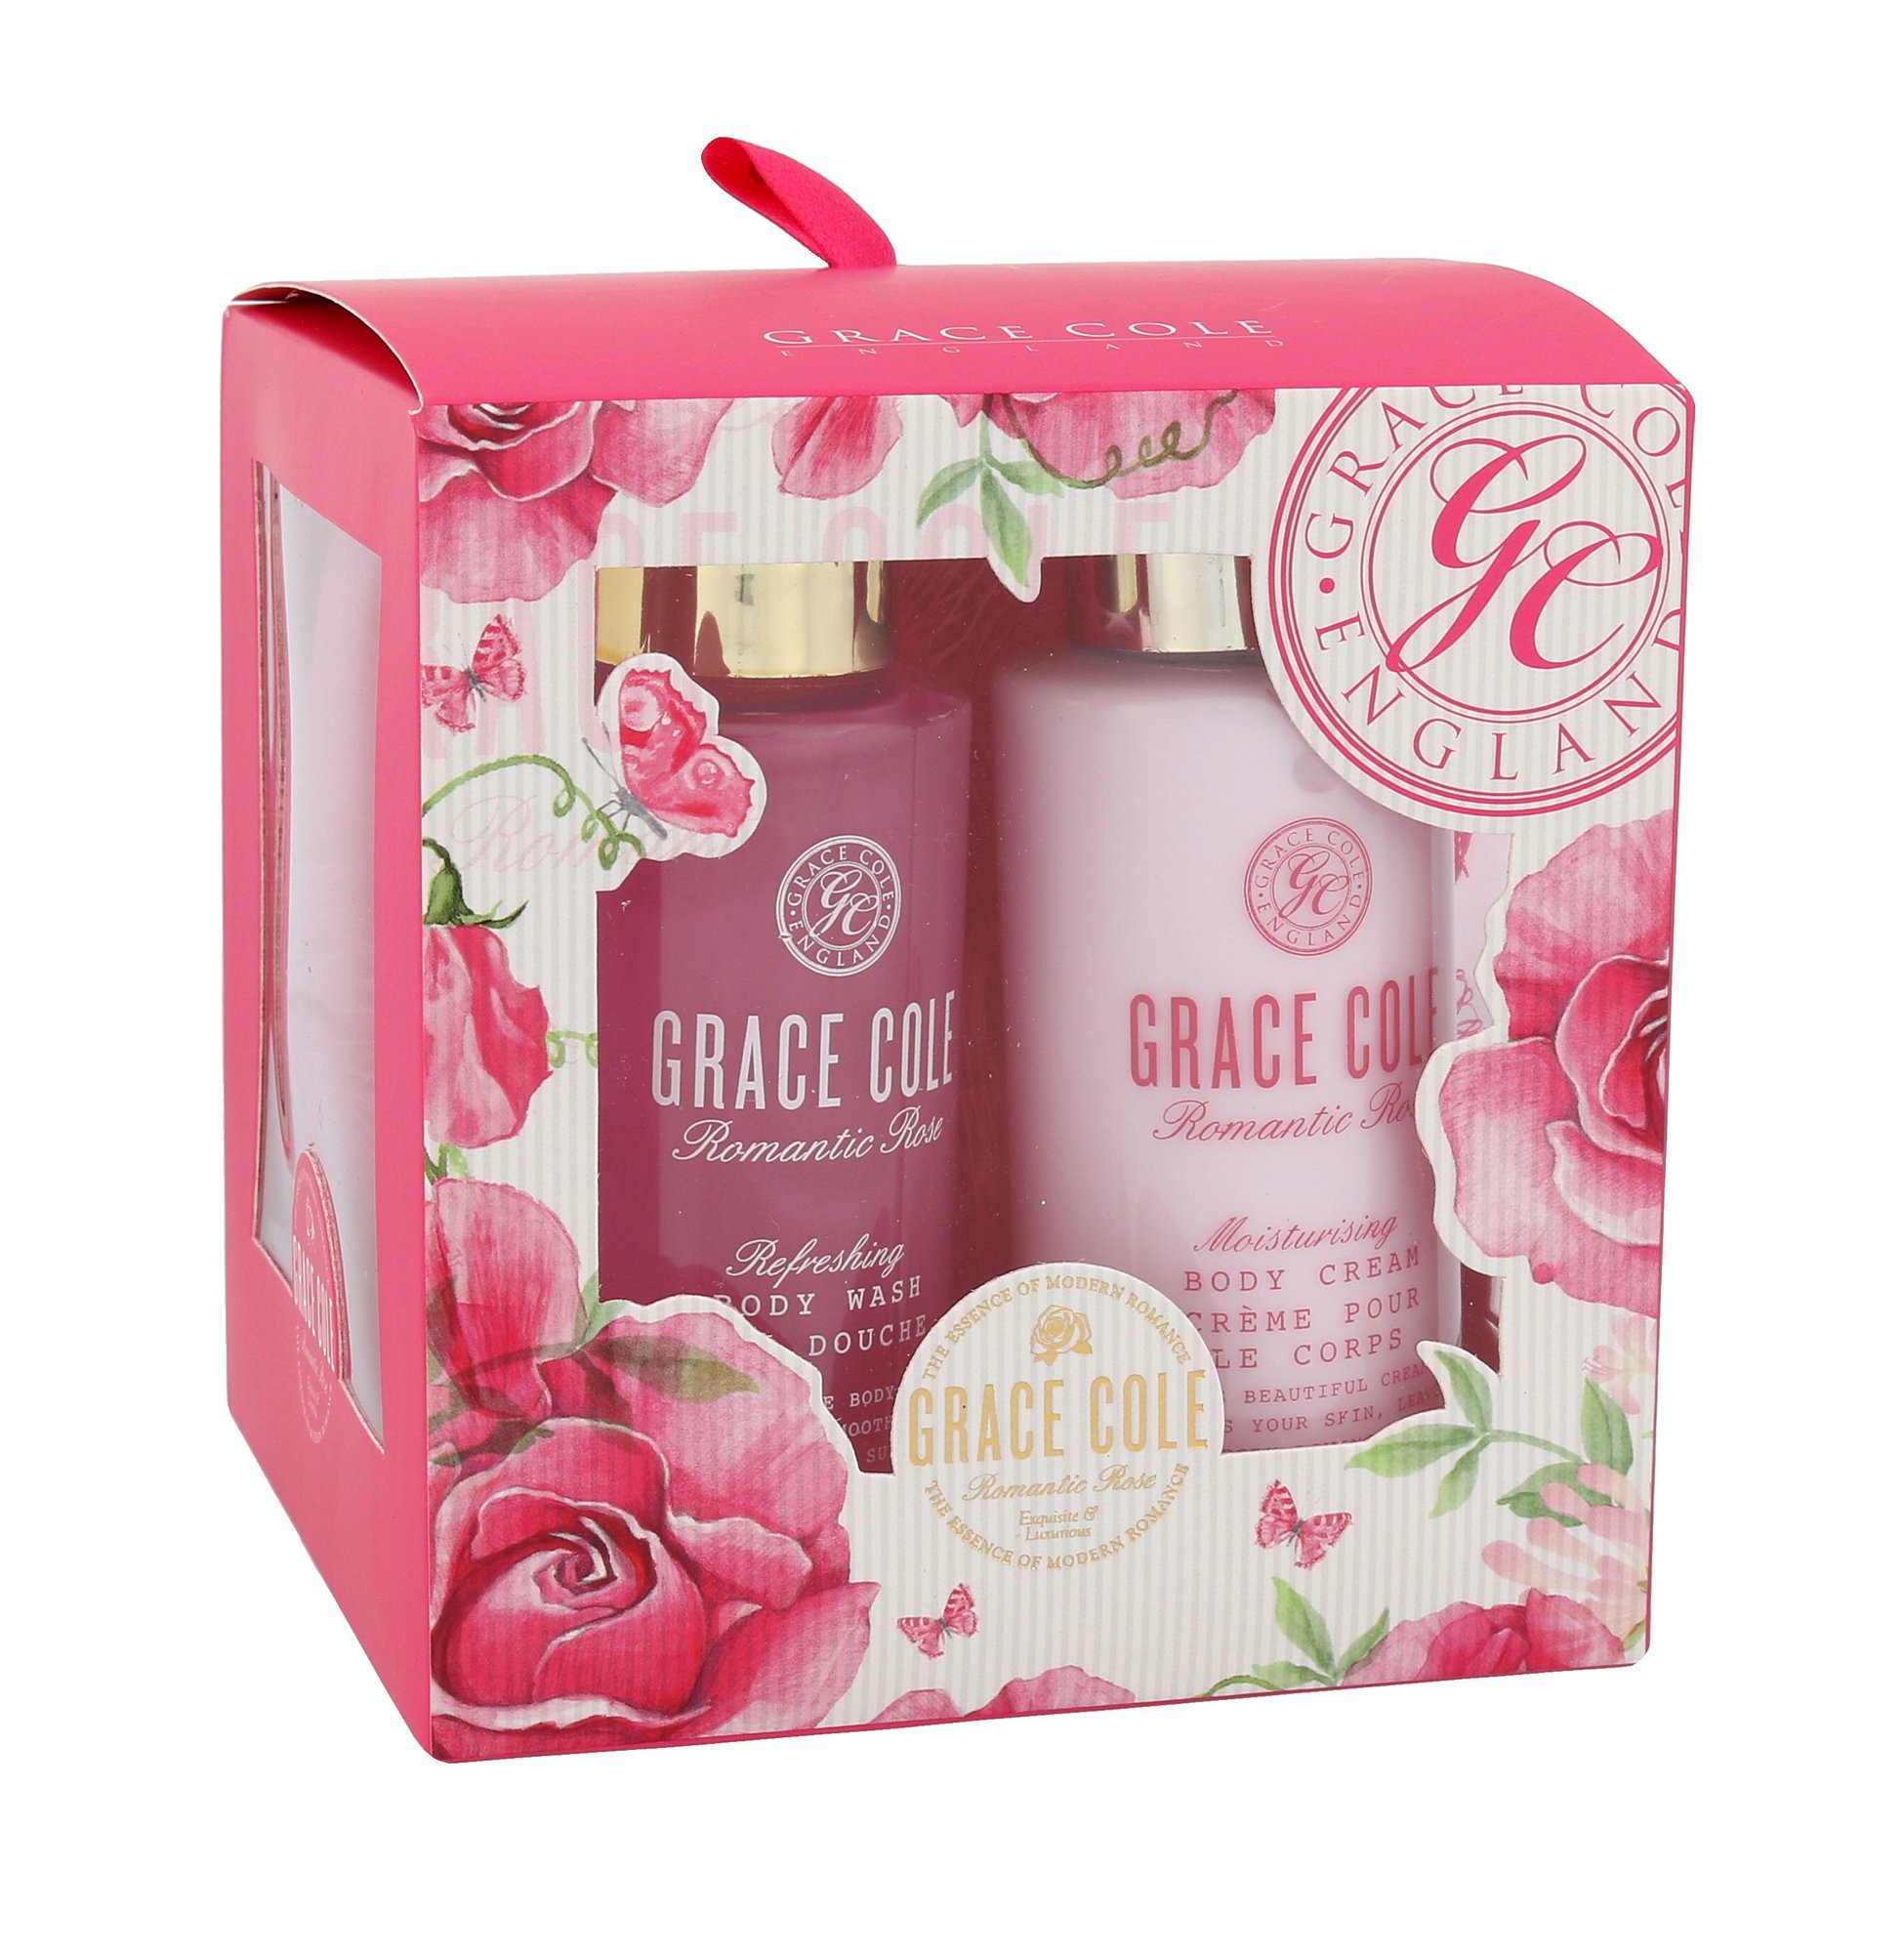 Grace Cole Romantic Rose 100ml Shower gel Refreshing 100 ml + Body cream Moisturising 100 ml + Sponge dušo želė Rinkinys